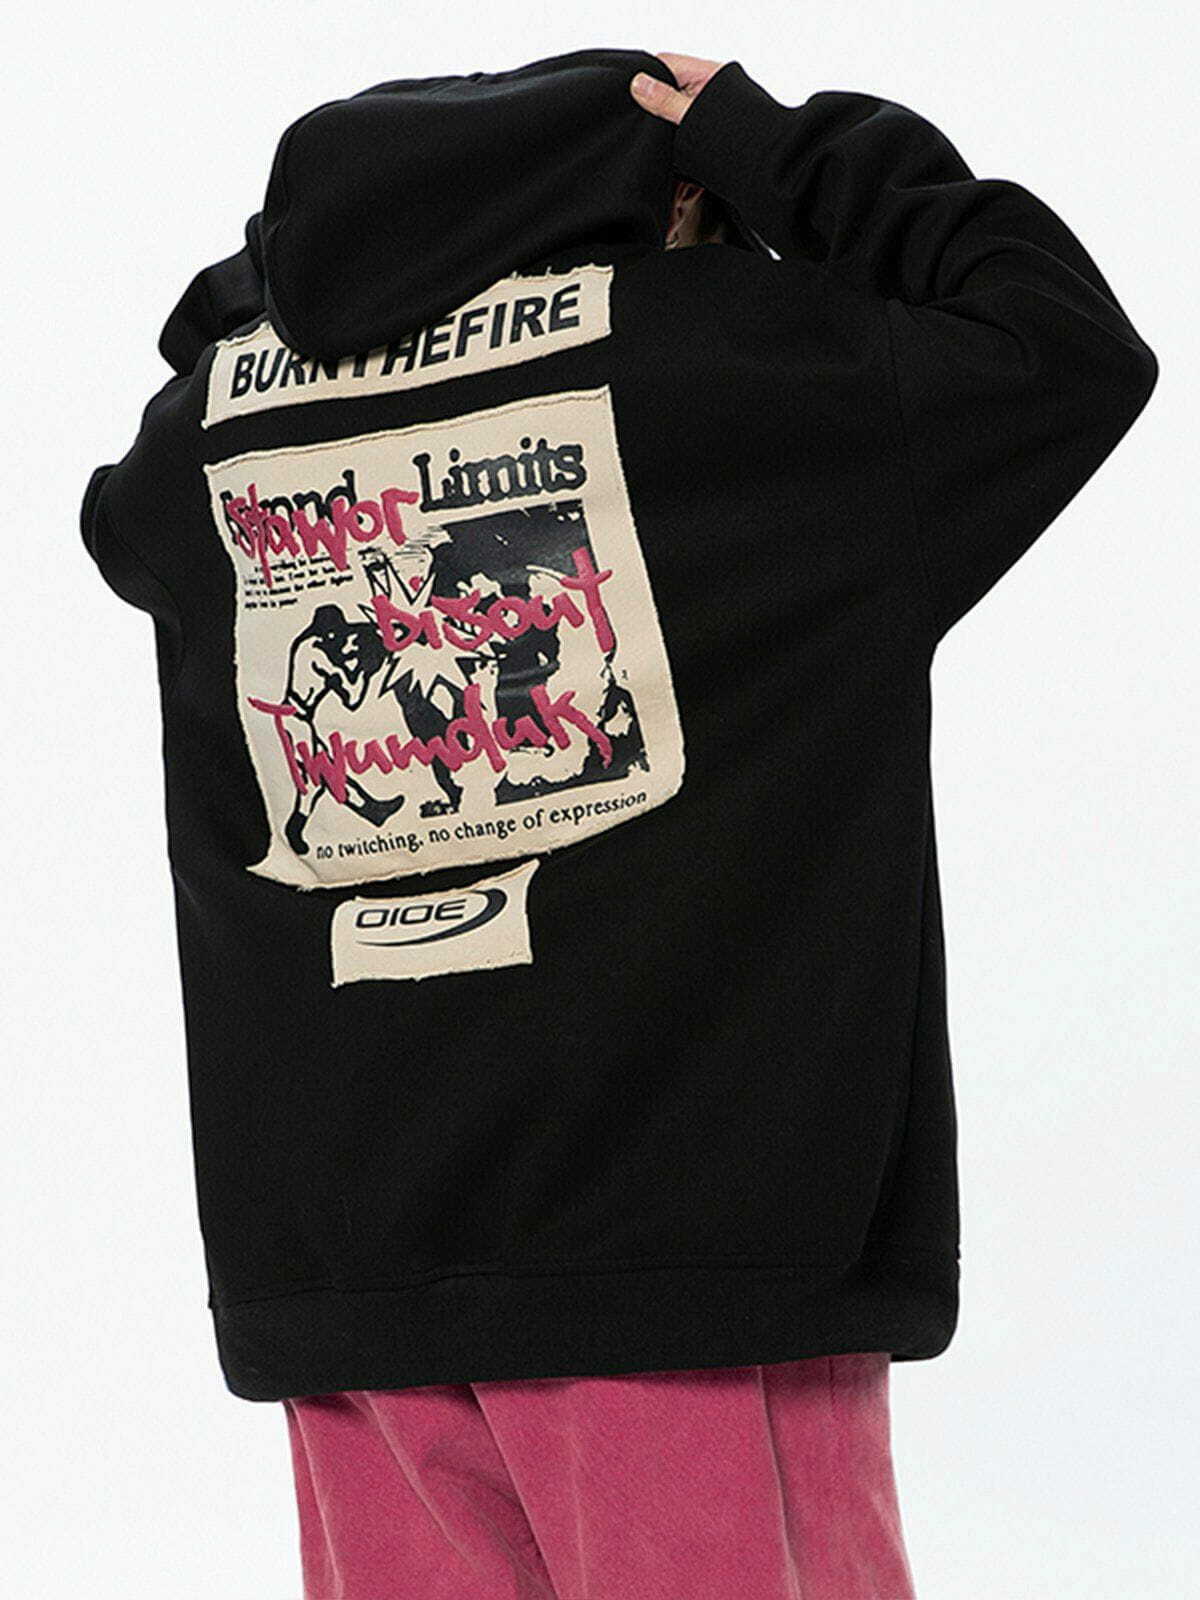 burn the fire hoodie edgy & retro streetwear 6435